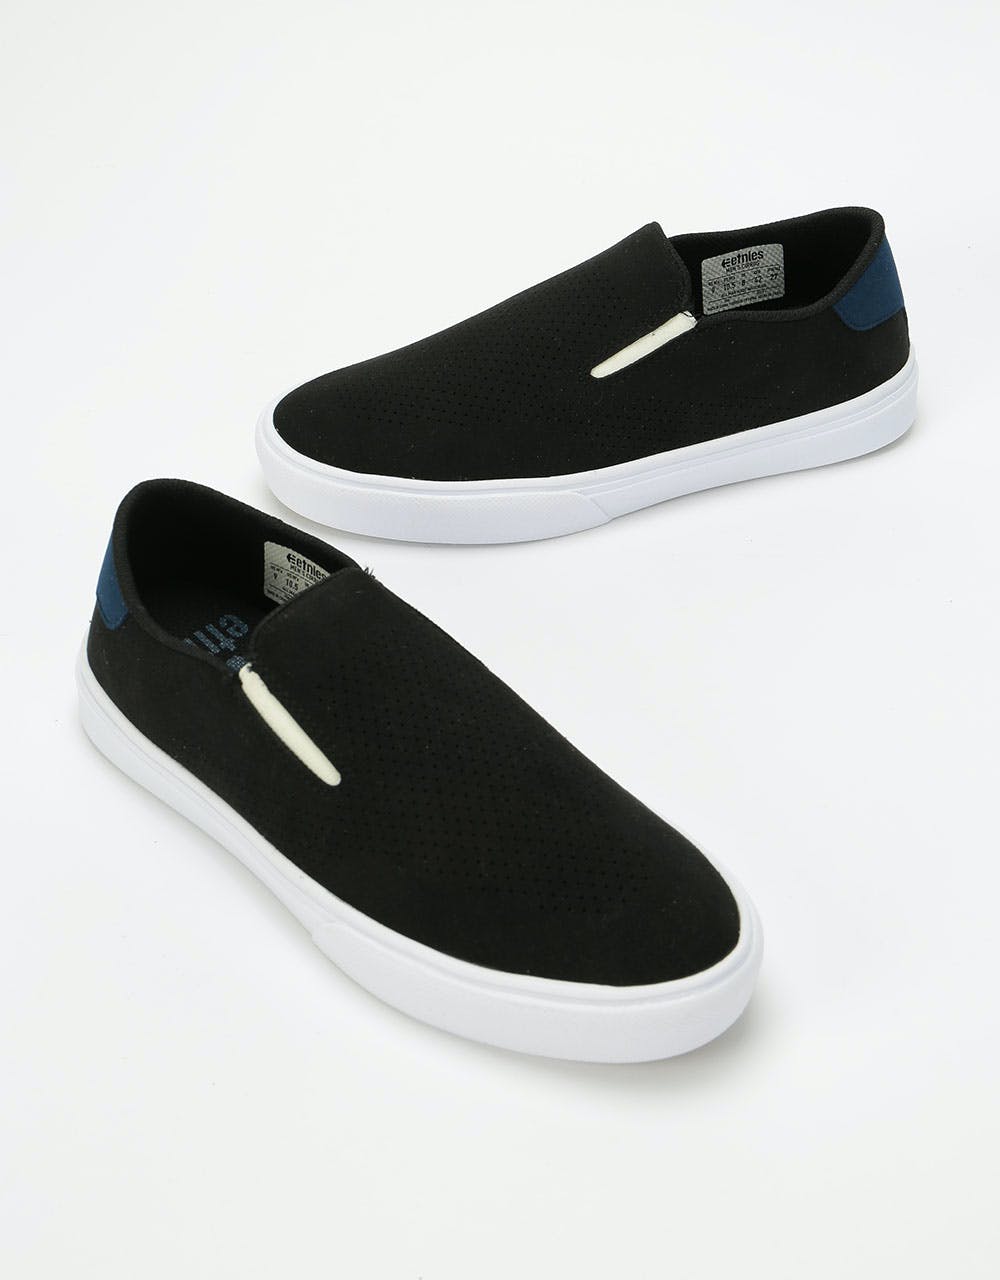 Etnies Cirrus Skate Shoes - Black